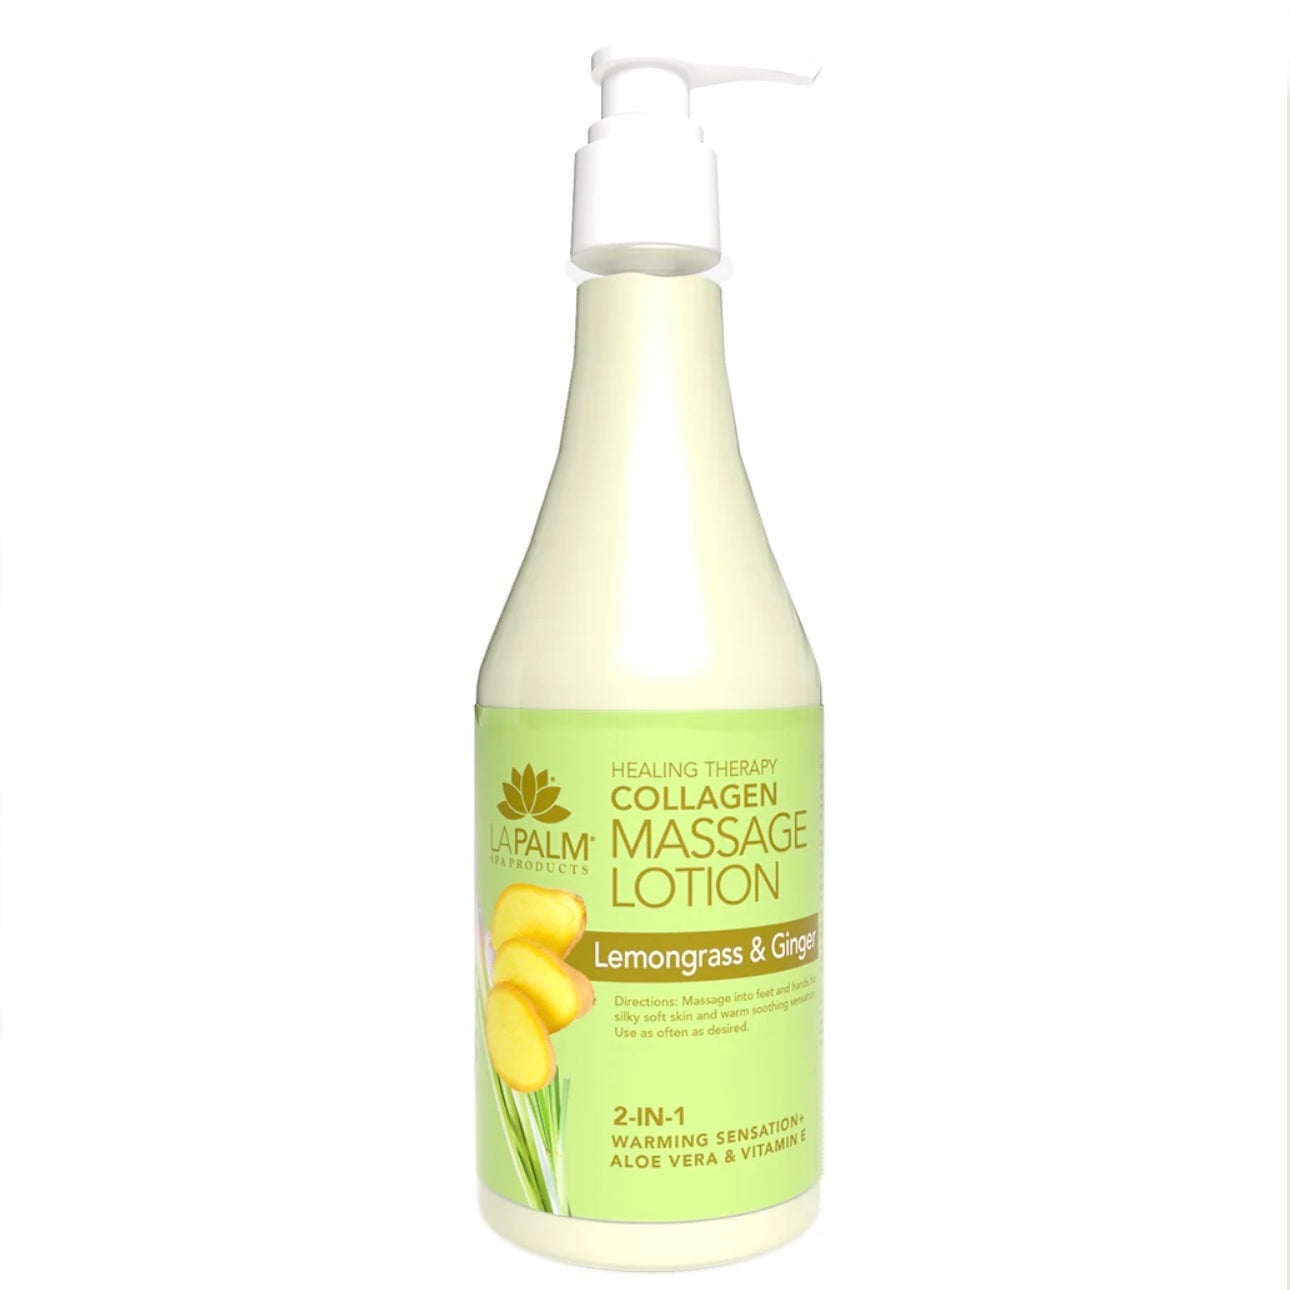 LaPalm Collagen Massage Lotion - Lemongrass & Ginger (24oz)